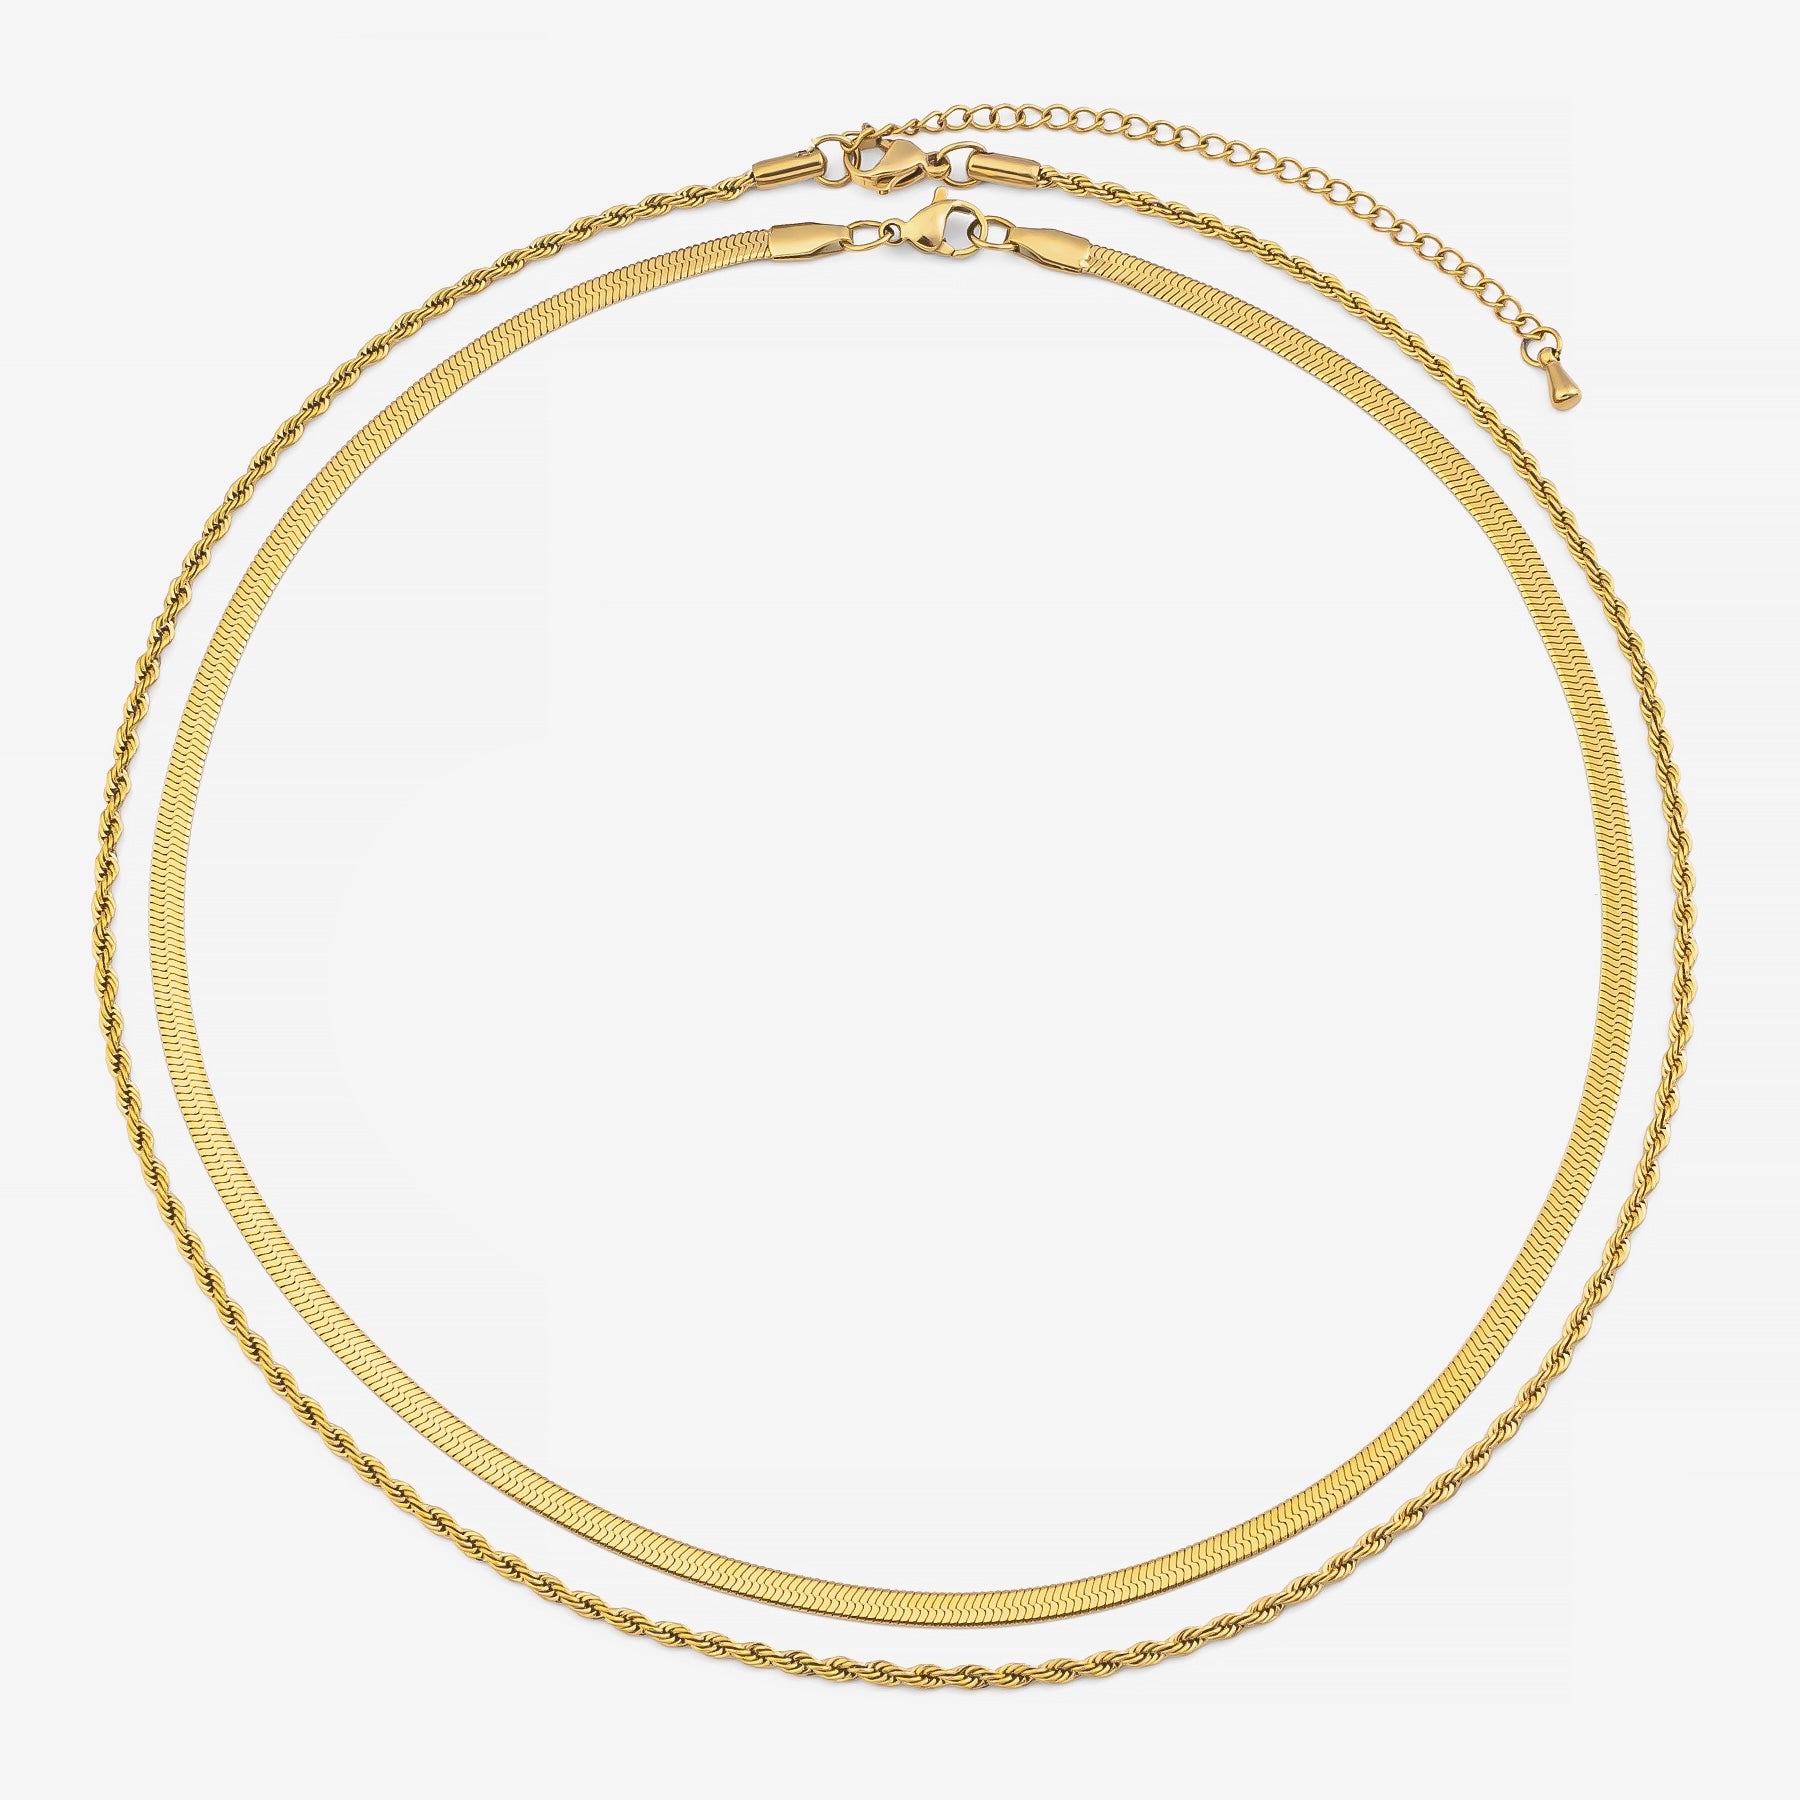 Bora Bora necklace set